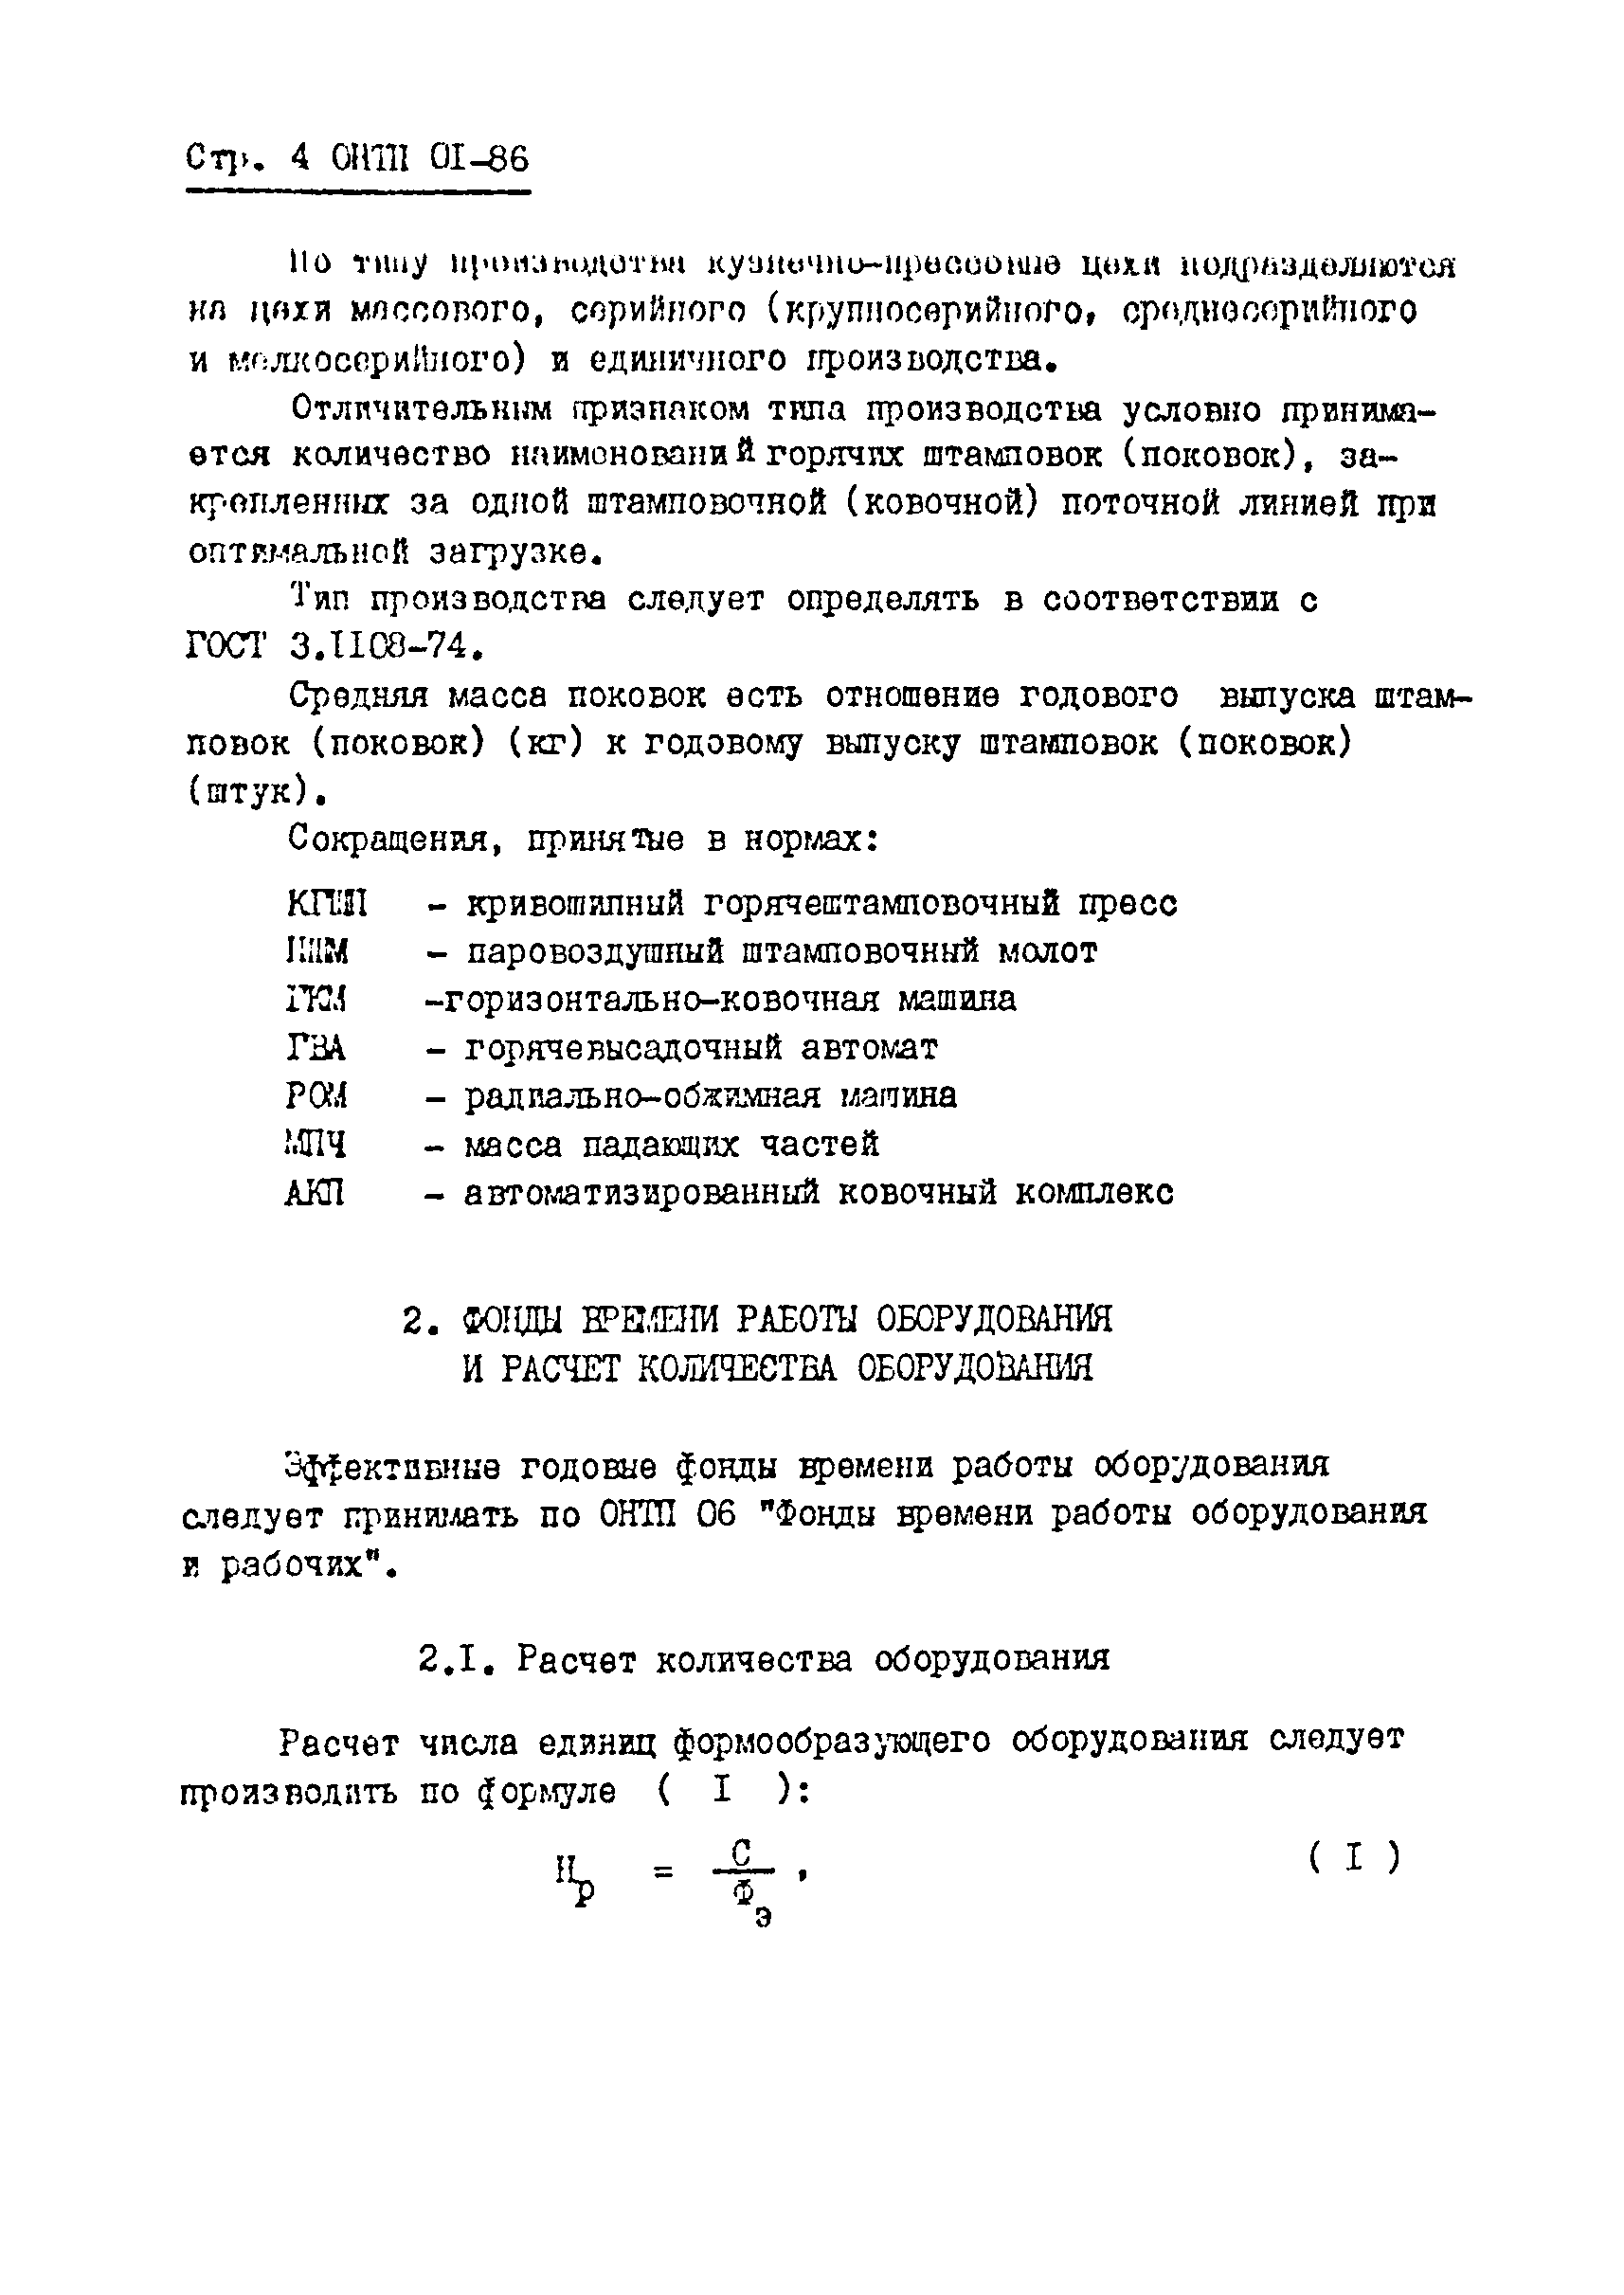 ОНТП 01-86/Минавтопром